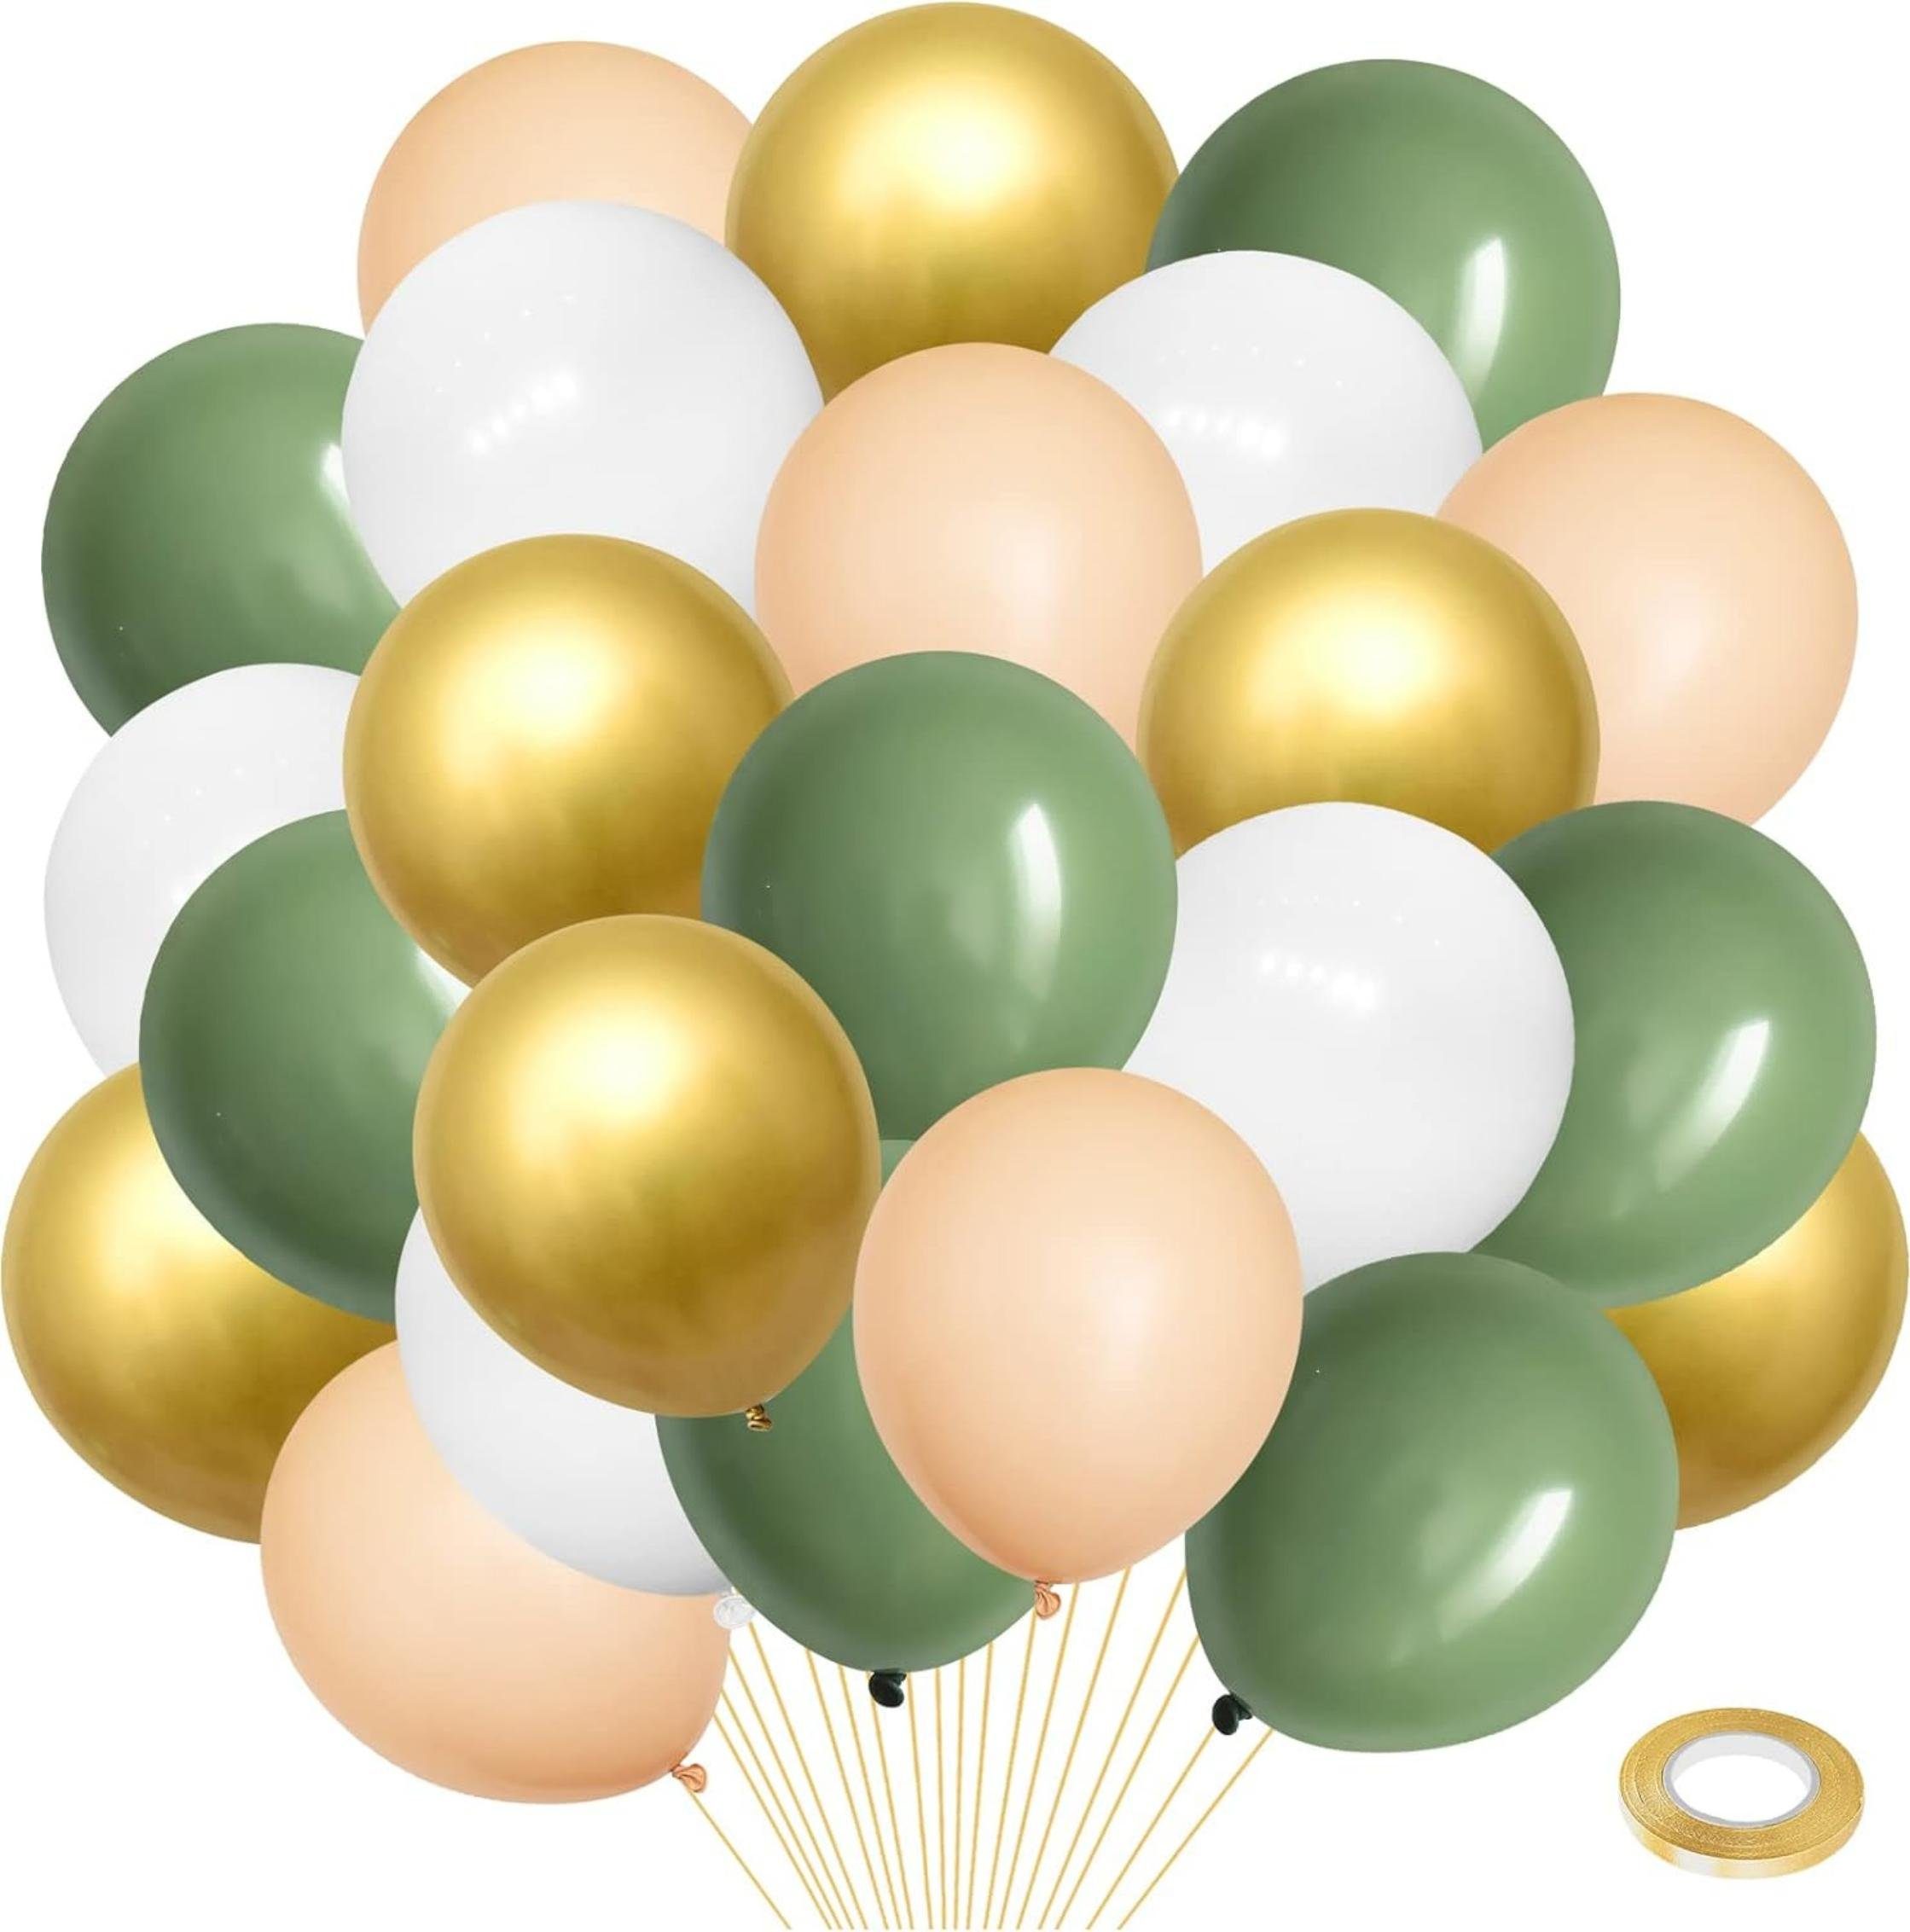 Coonoor Luftballon 50 pcs Luftballons Girlande Deko Gold Grün Geburtstag | Luftballons